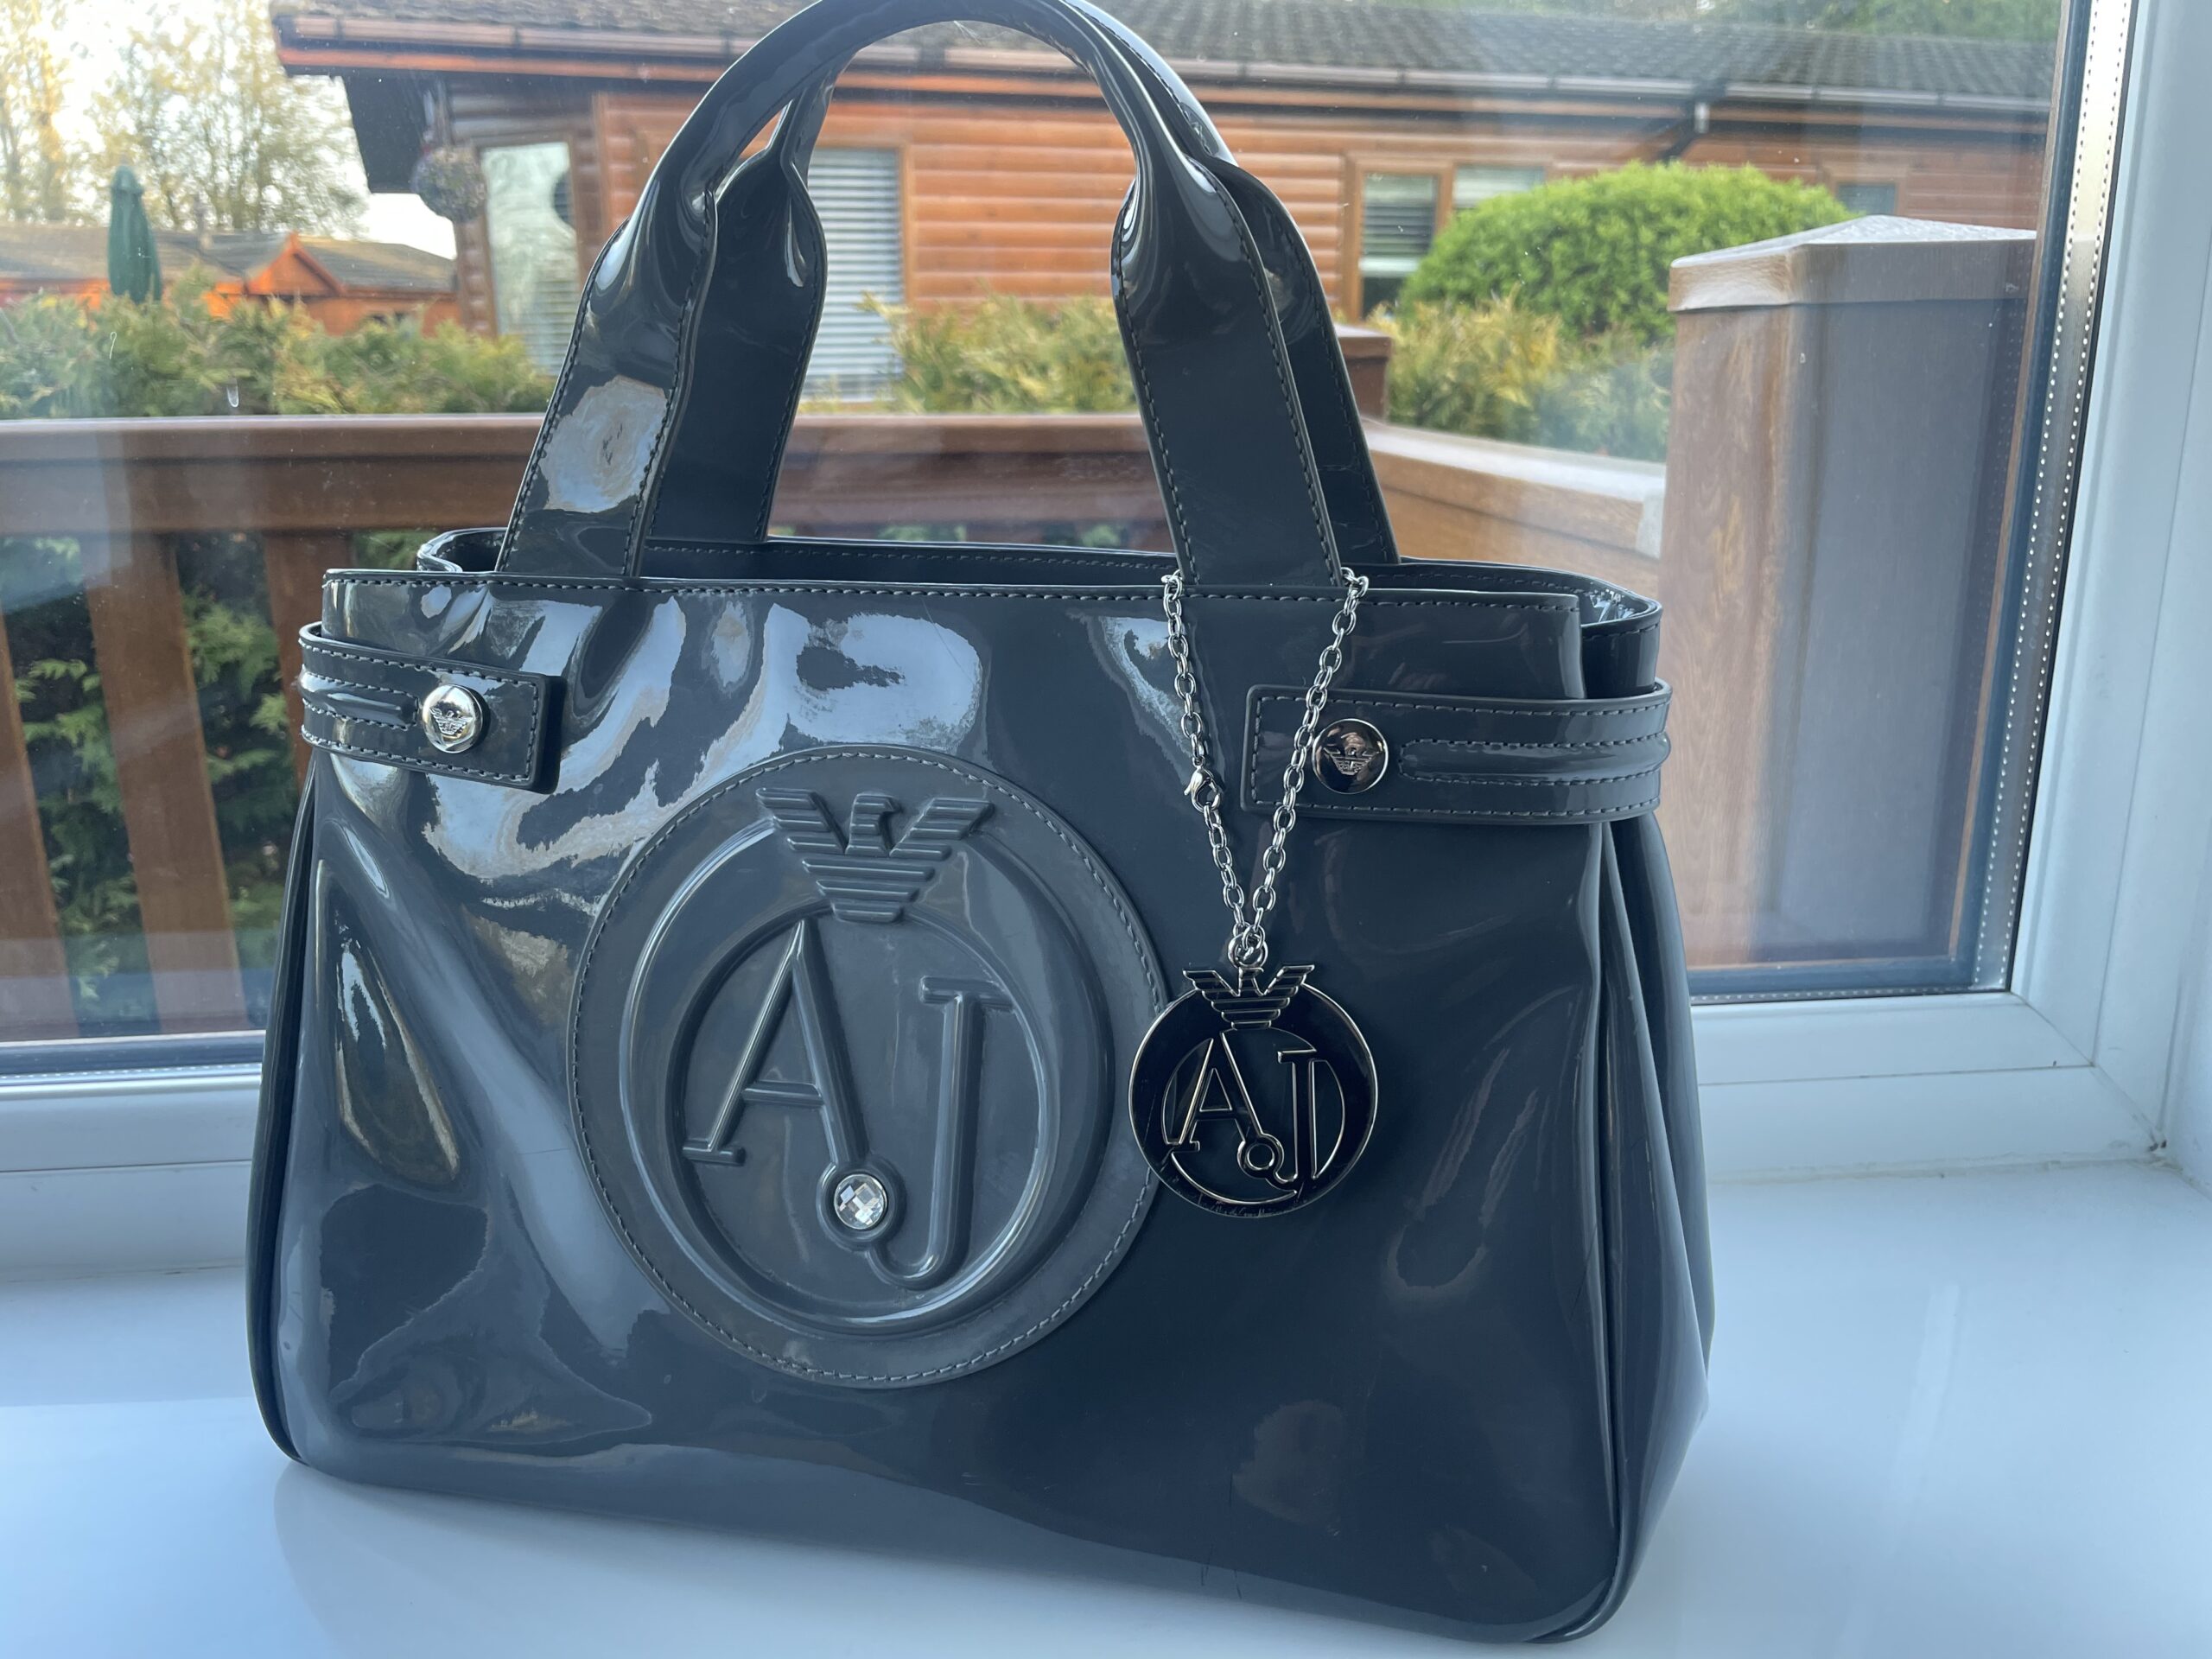 NIRA RUBENS | Steel grey Women's Handbag | YOOX